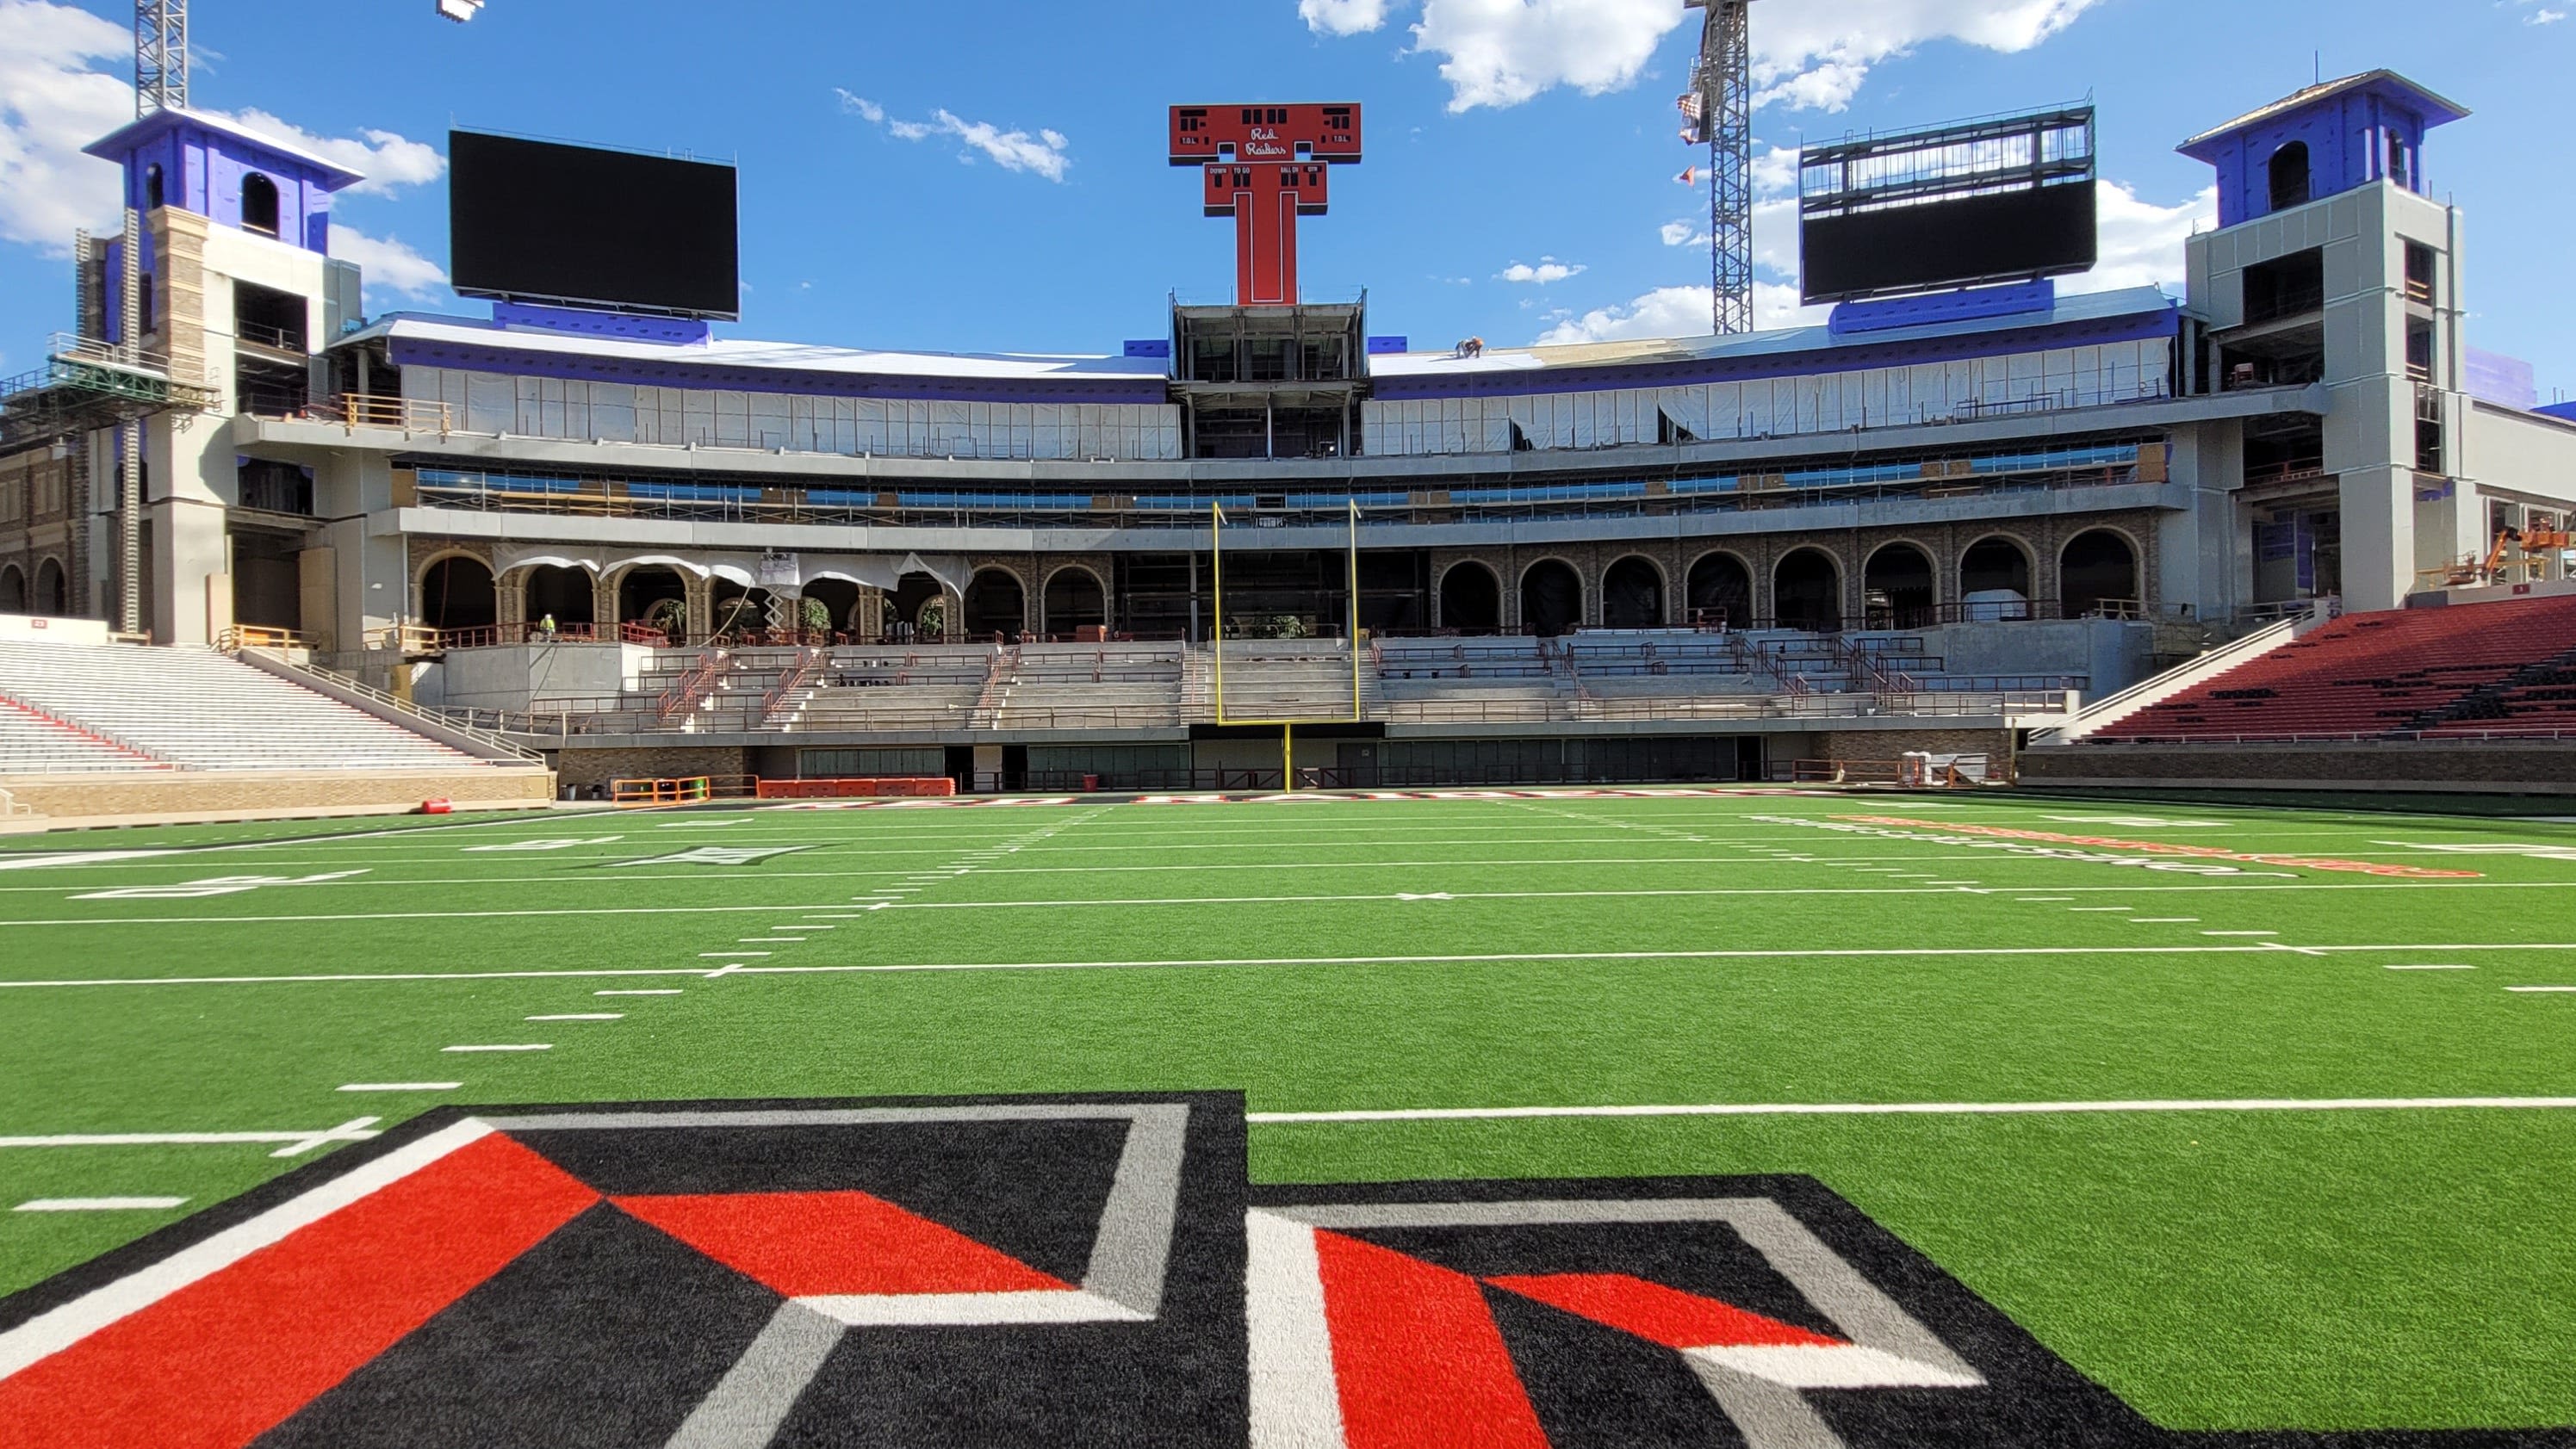 Watch a 360-degree view of Texas Tech football's Jones AT&T Stadium construction project